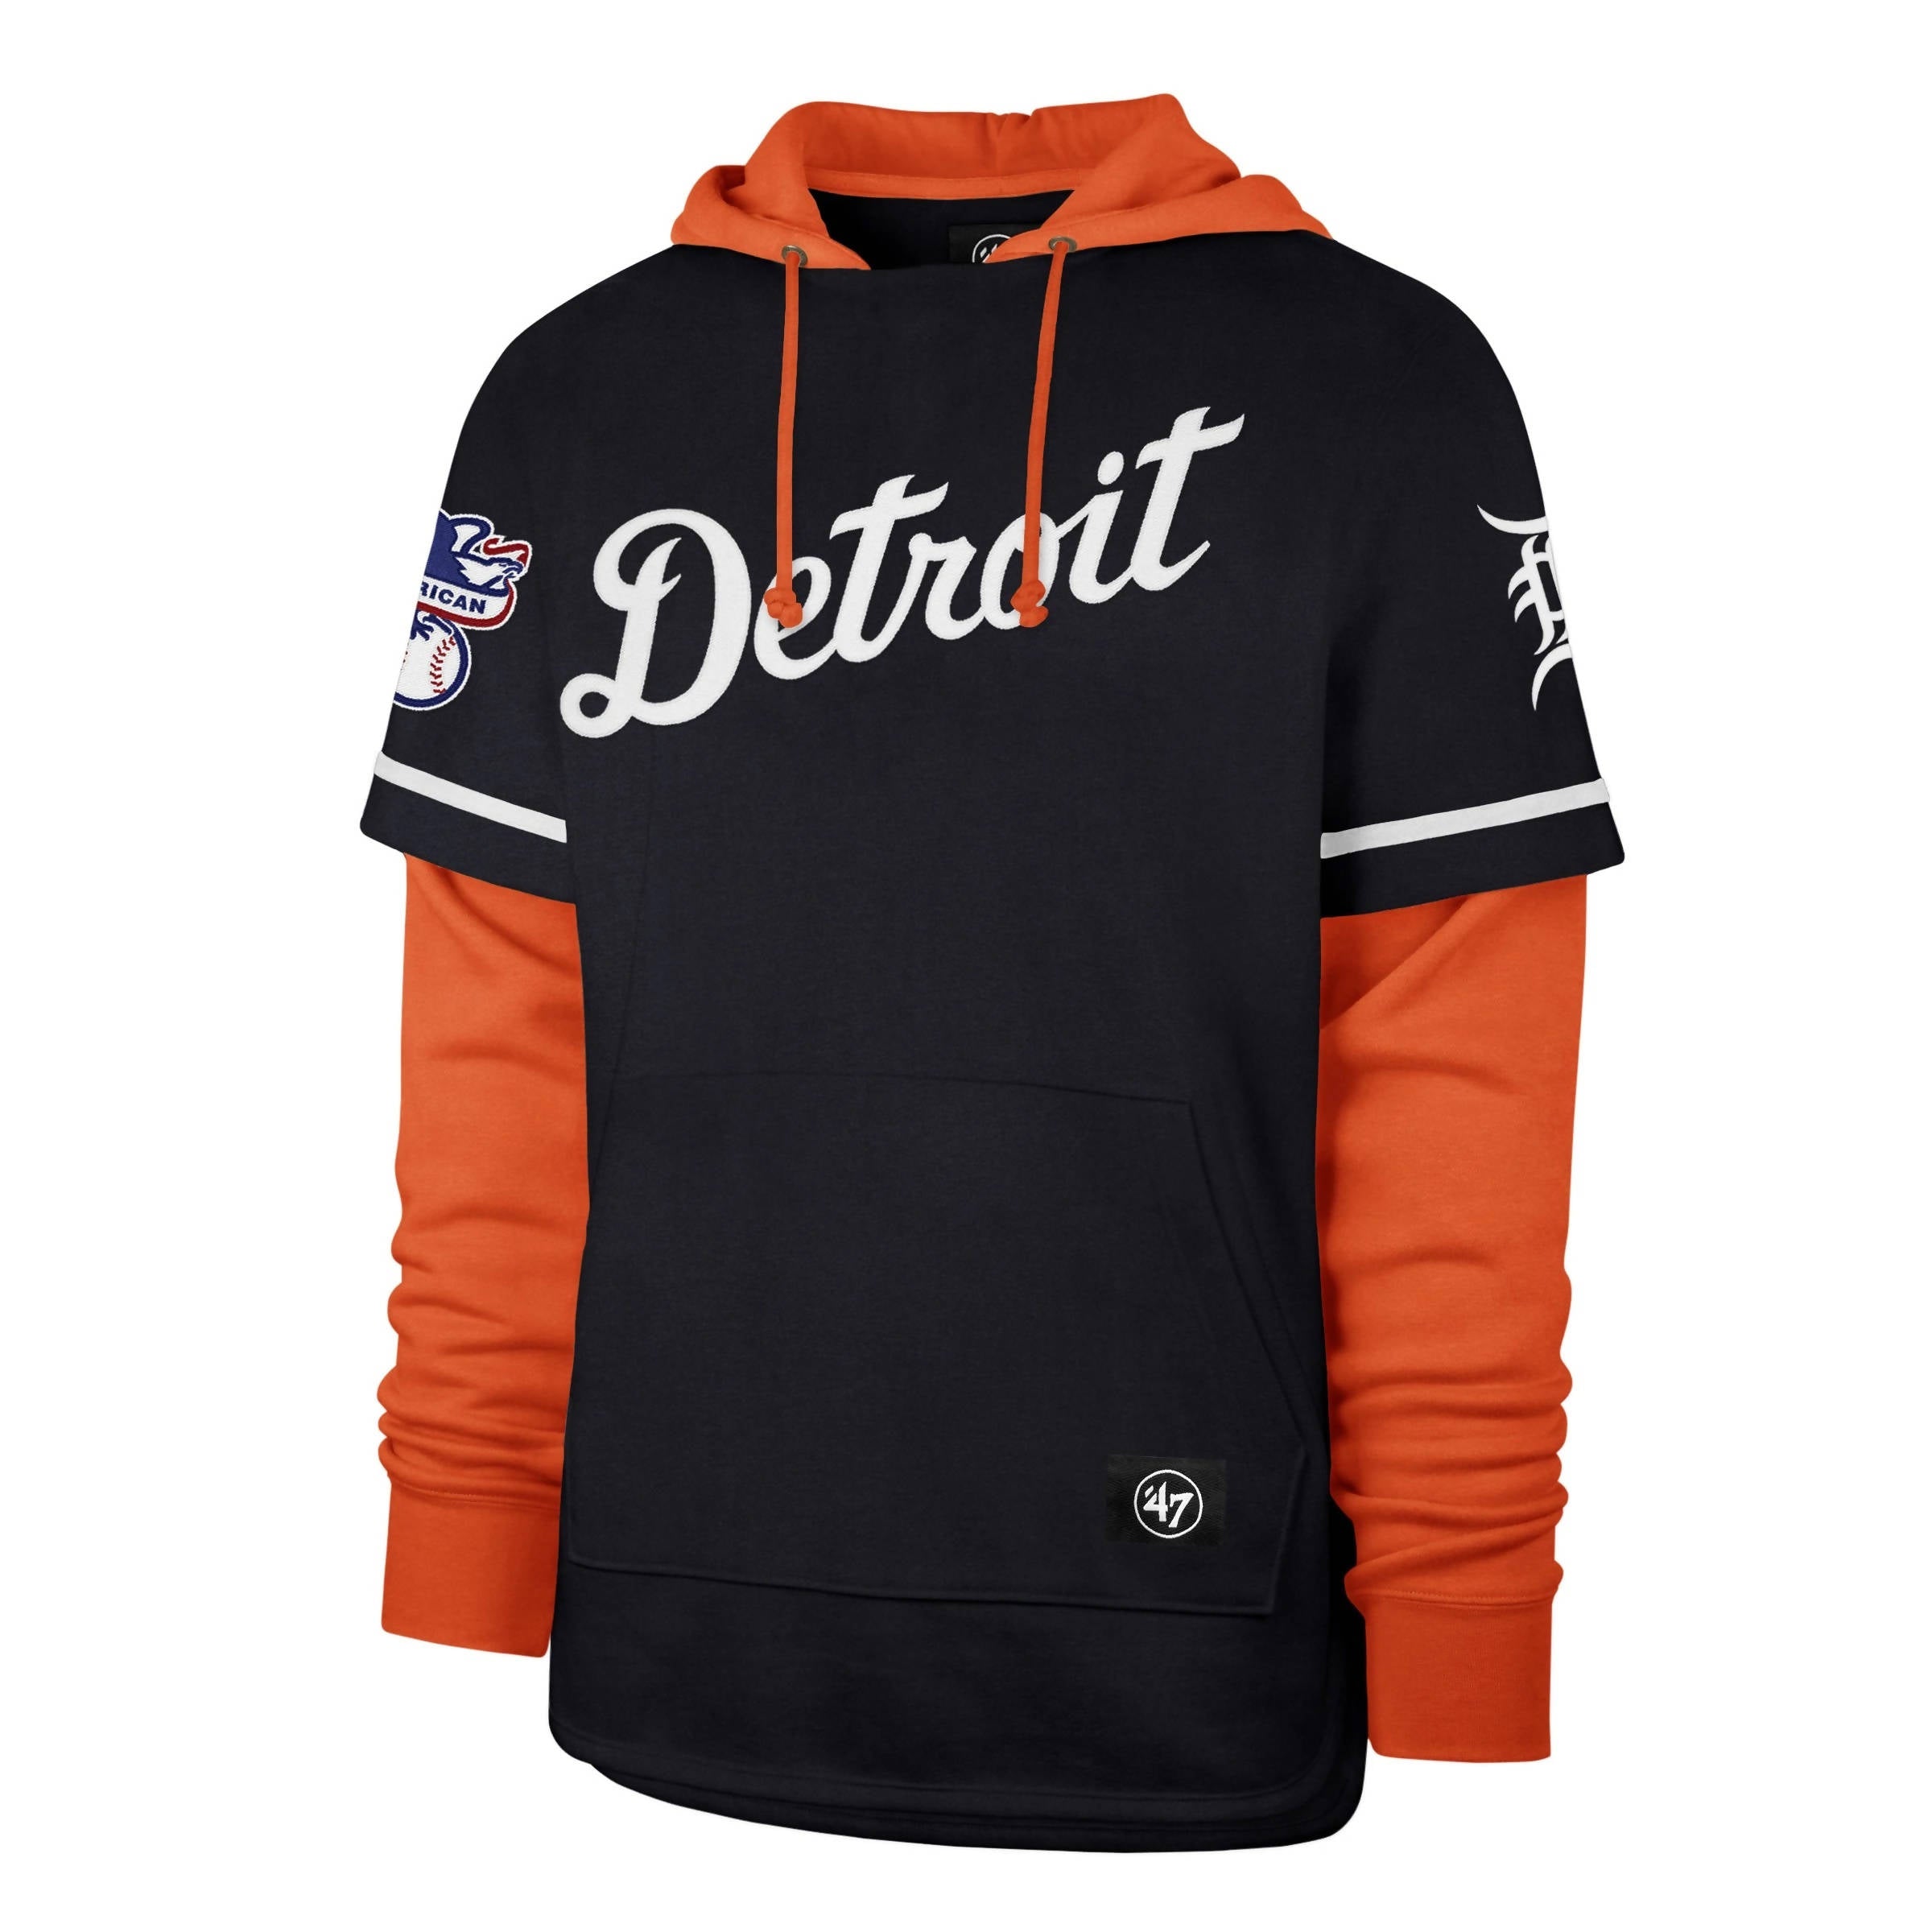 Detroit Tigers Orange Motor City Baseball T-Shirt 47 Brand